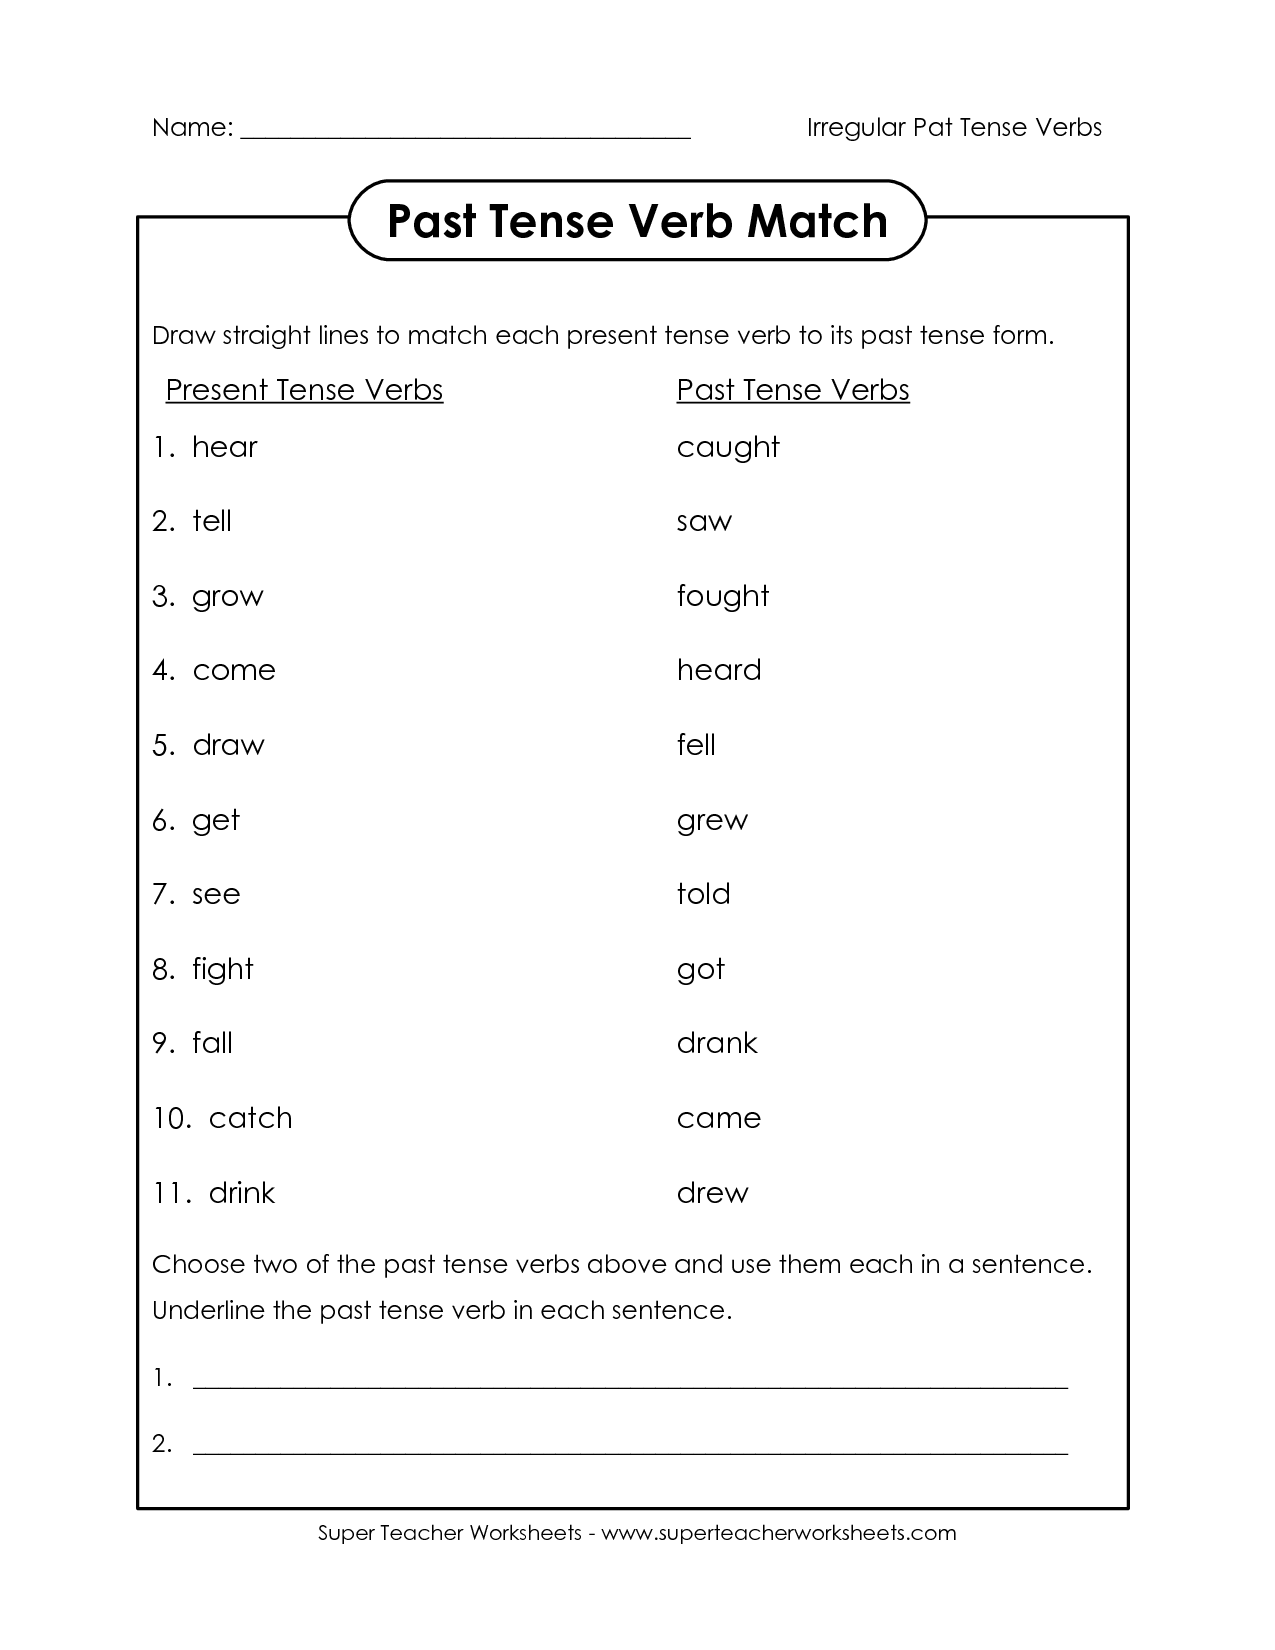 18-best-images-of-past-tense-verbs-worksheets-irregular-past-tense